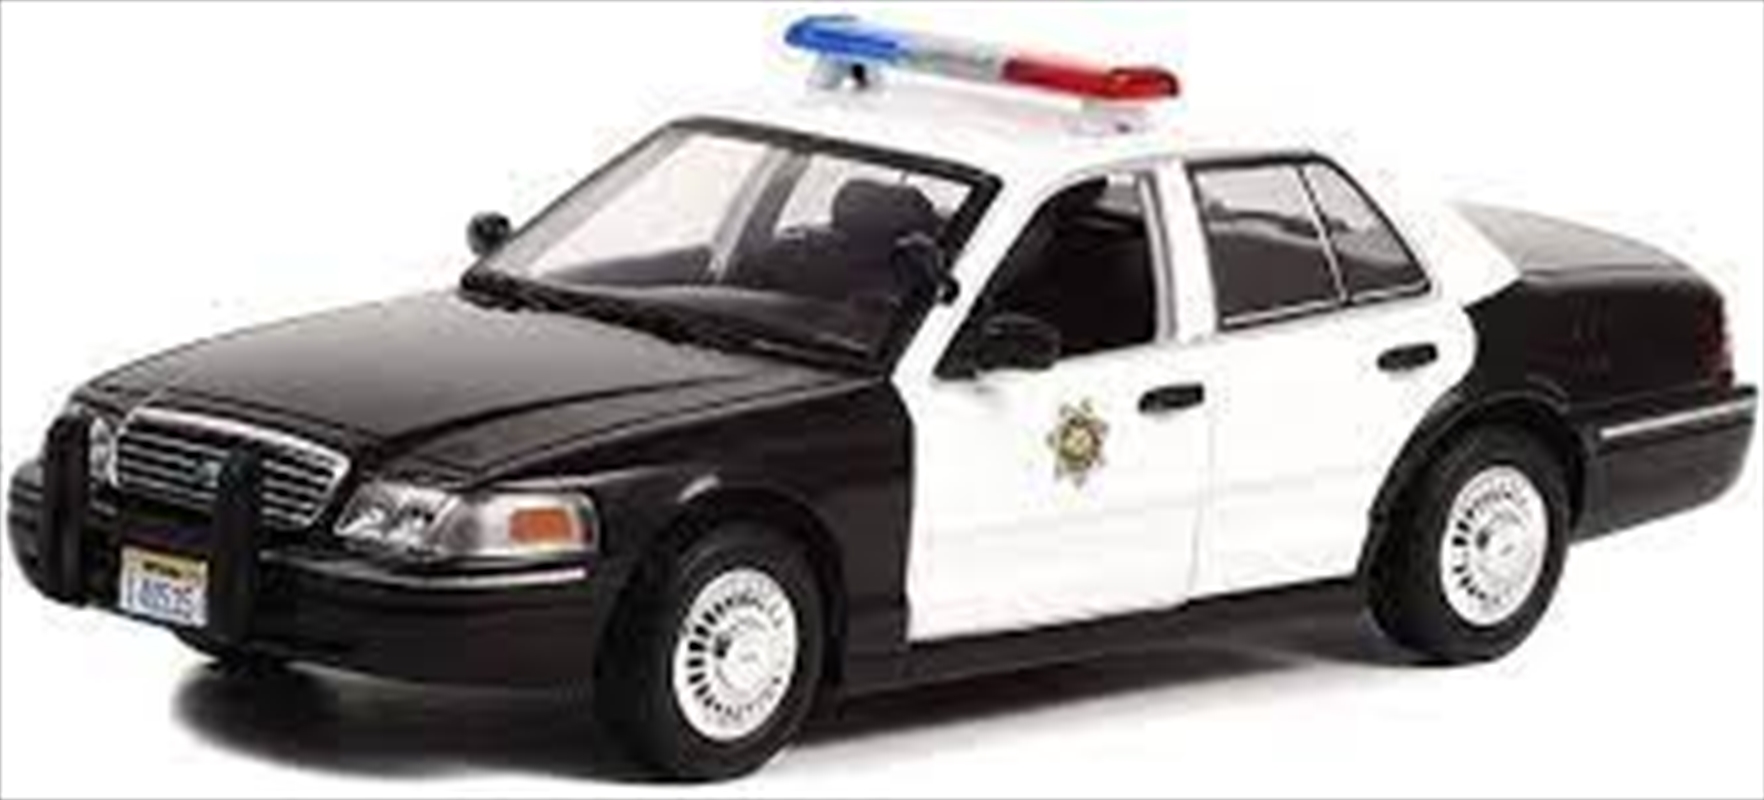 1:24 Reno 911 Lieutenant Jim Dangle's 1998 Ford Crown Victoria Police Interceptor - Reno Sherriff's/Product Detail/Figurines